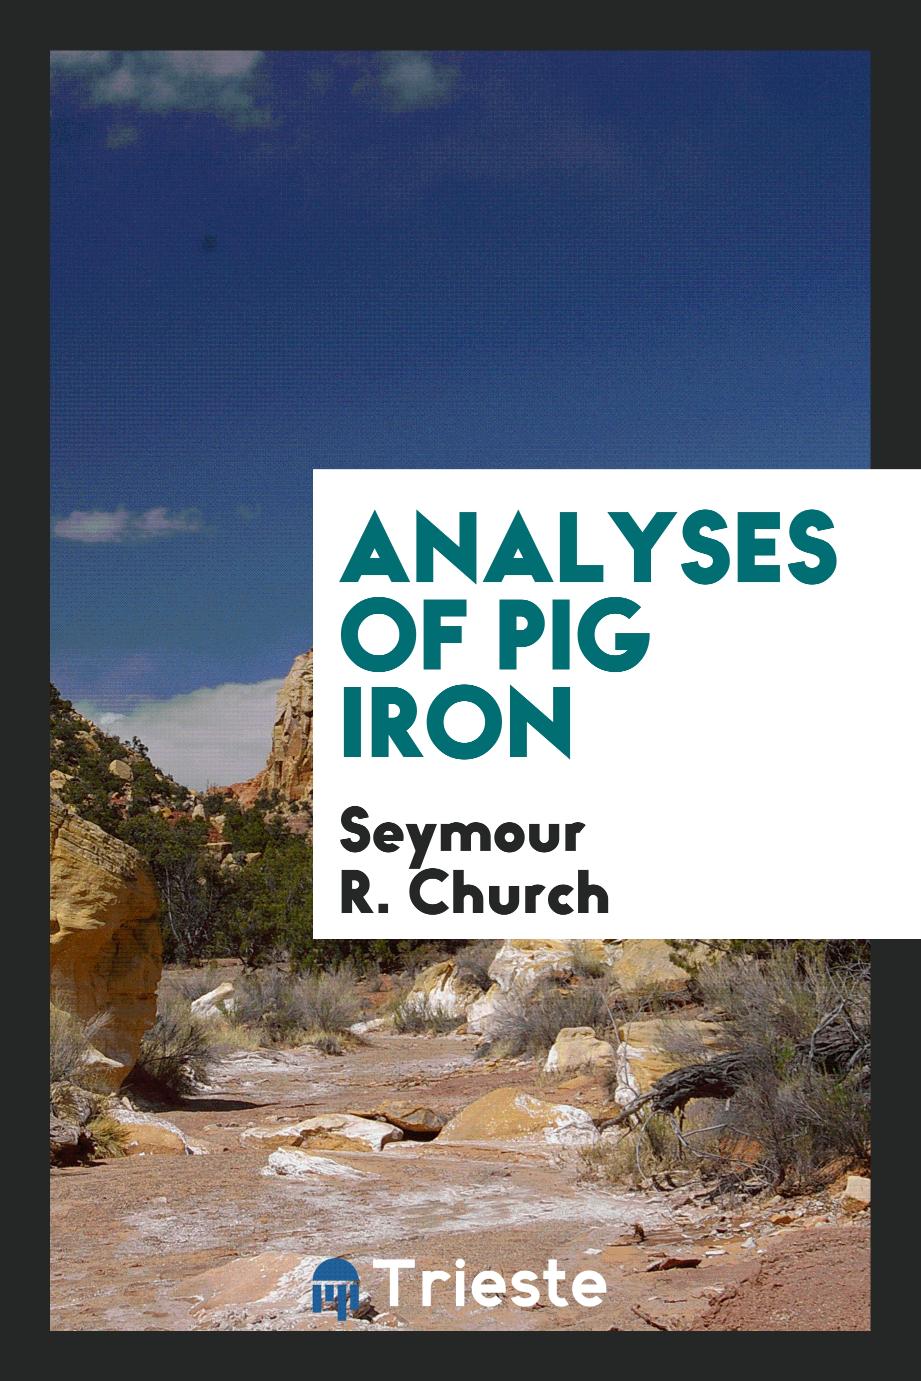 Analyses of pig iron